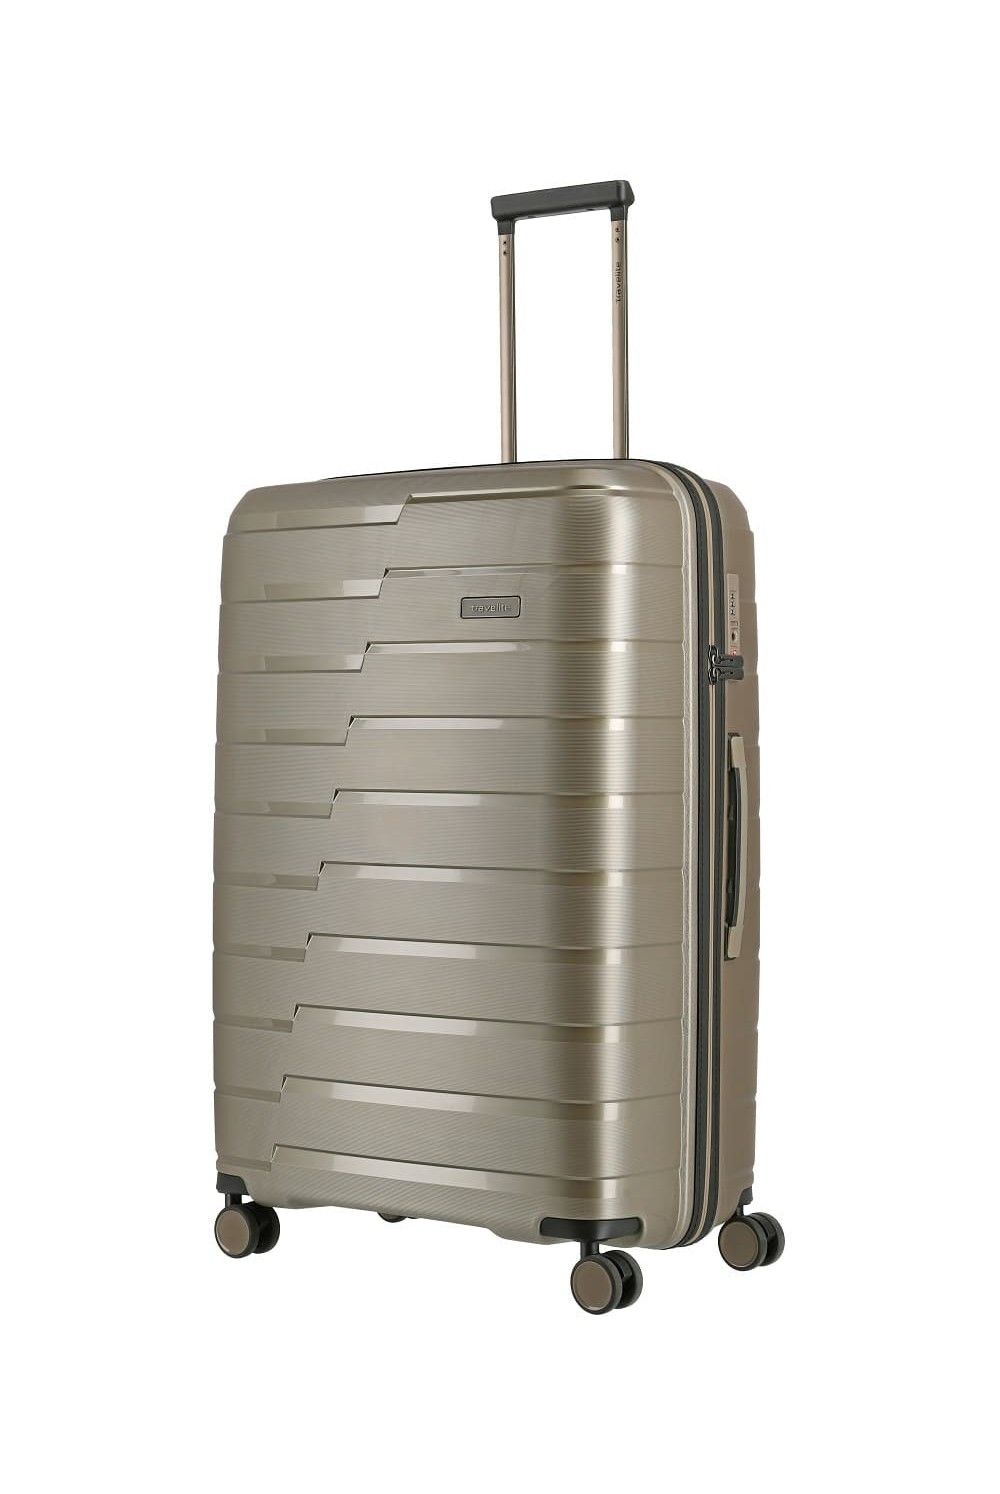 Suitcase Air Base Travelite 77cm 105 liter 4 wheel